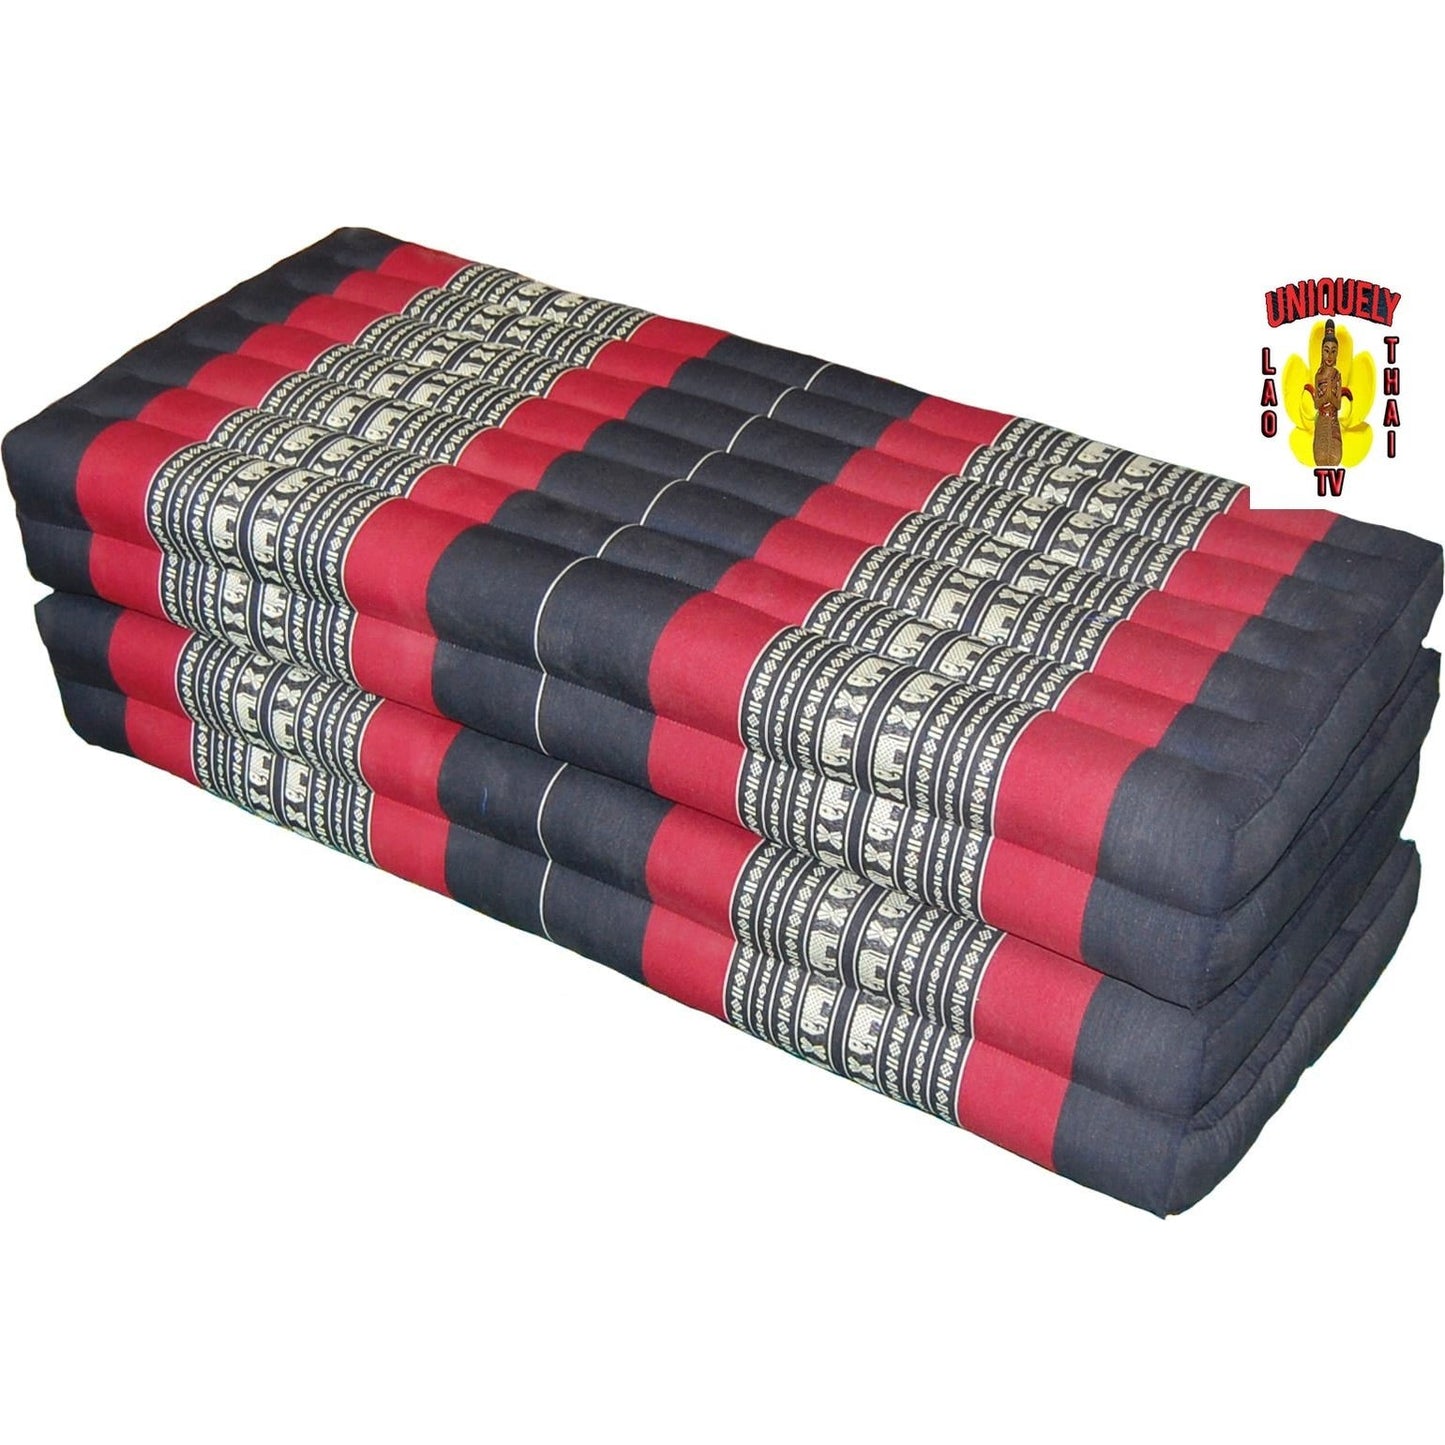 Futon Mattress Four Fold Black, Red, White Elephant Pattern